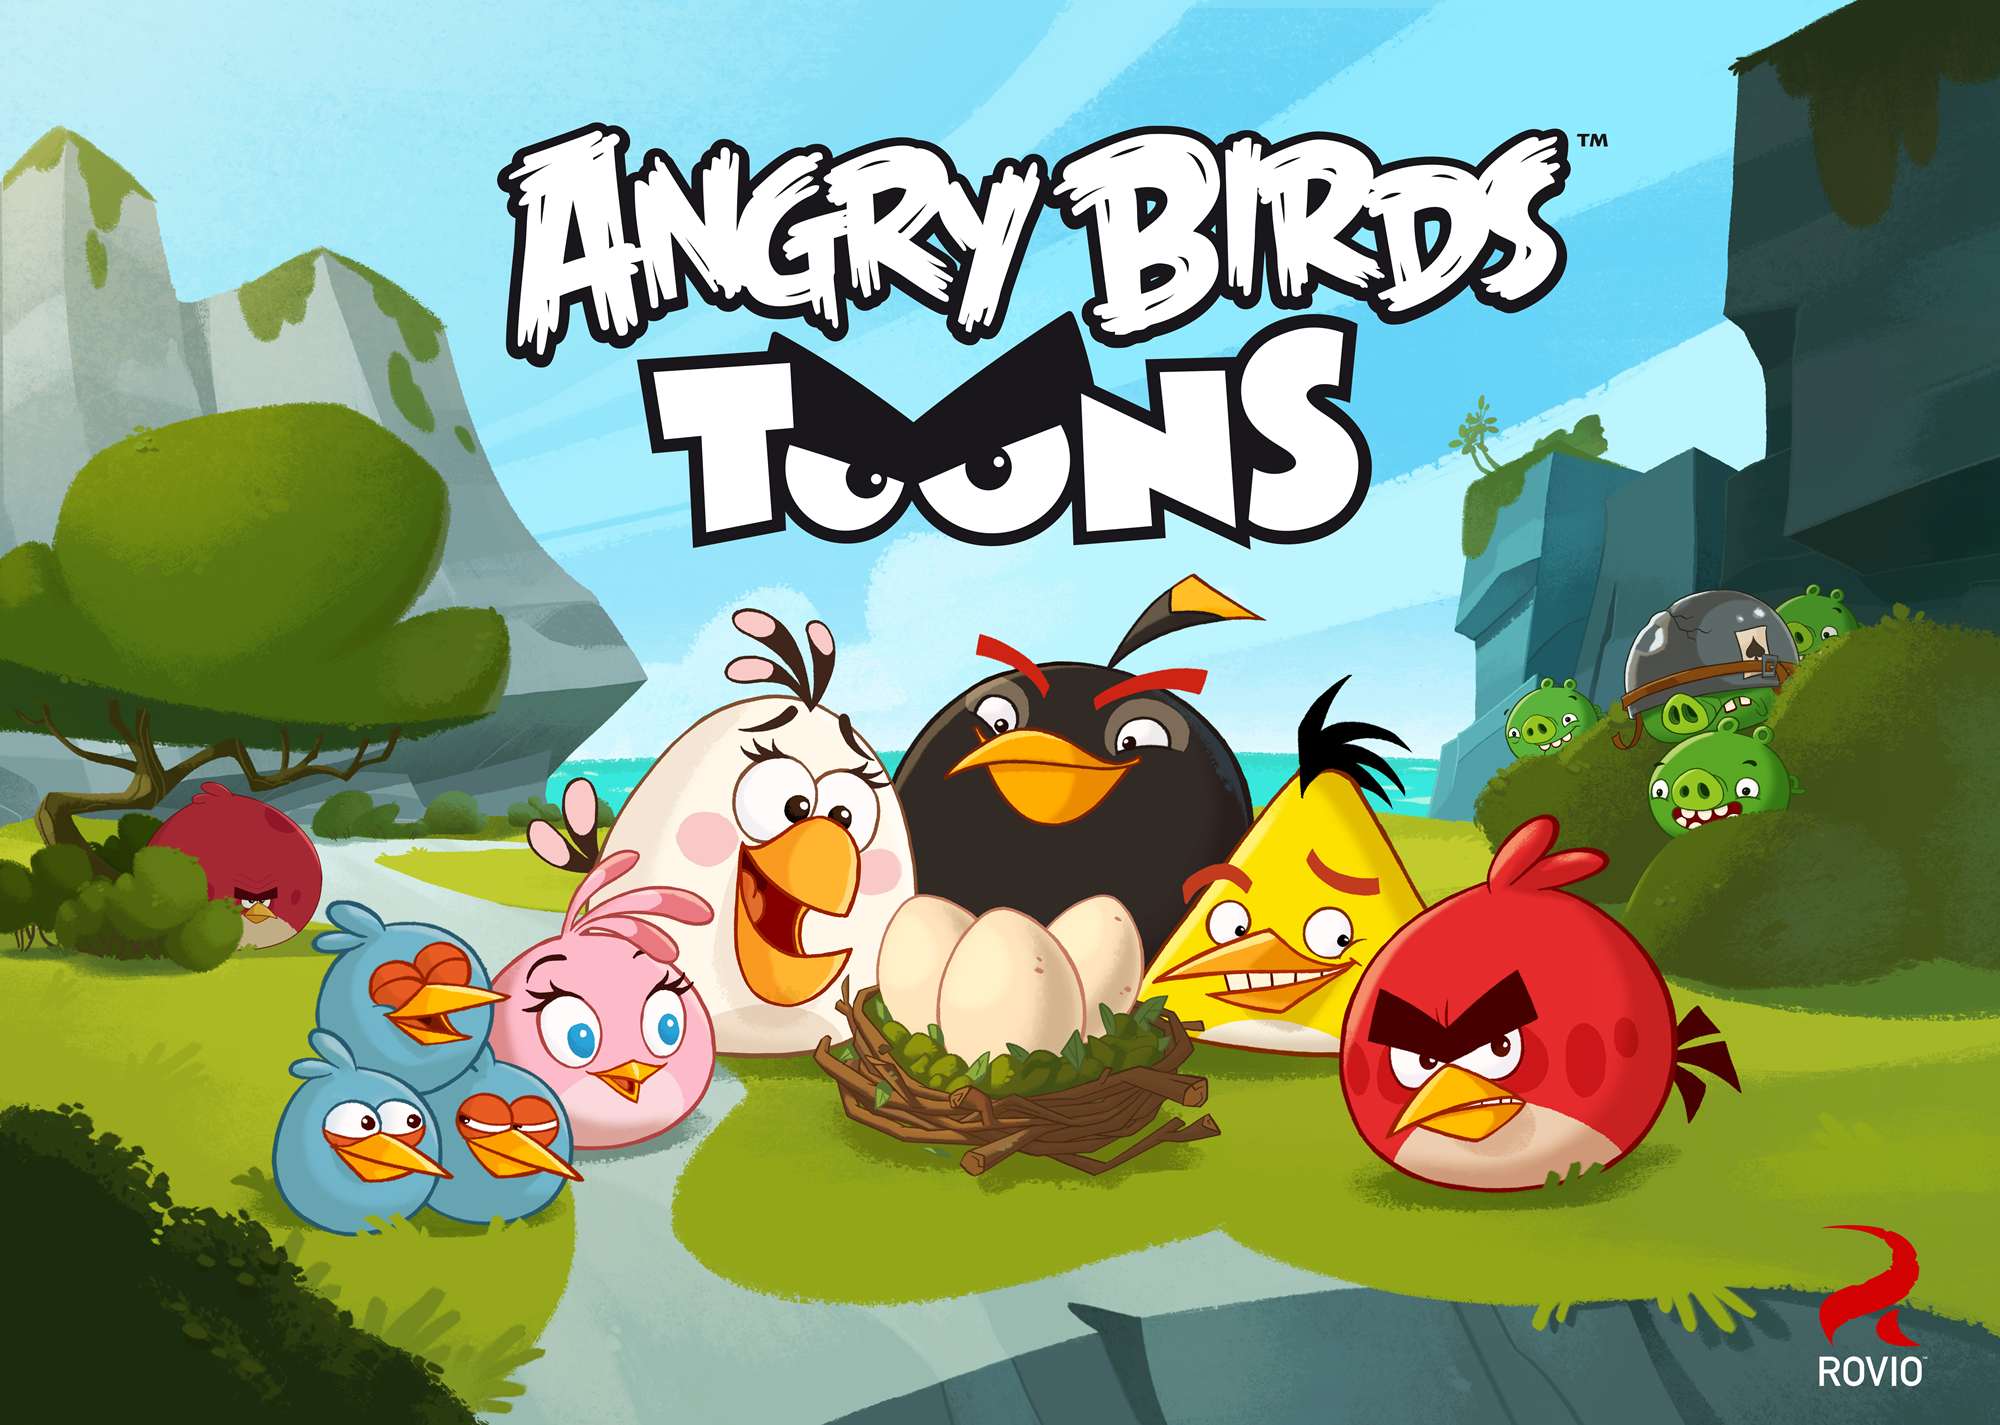 Игра Angry Birds toons. Злые птички (Angry Birds toons!) 2013. Angry Birds игры Rovio. Ангри берс 2.